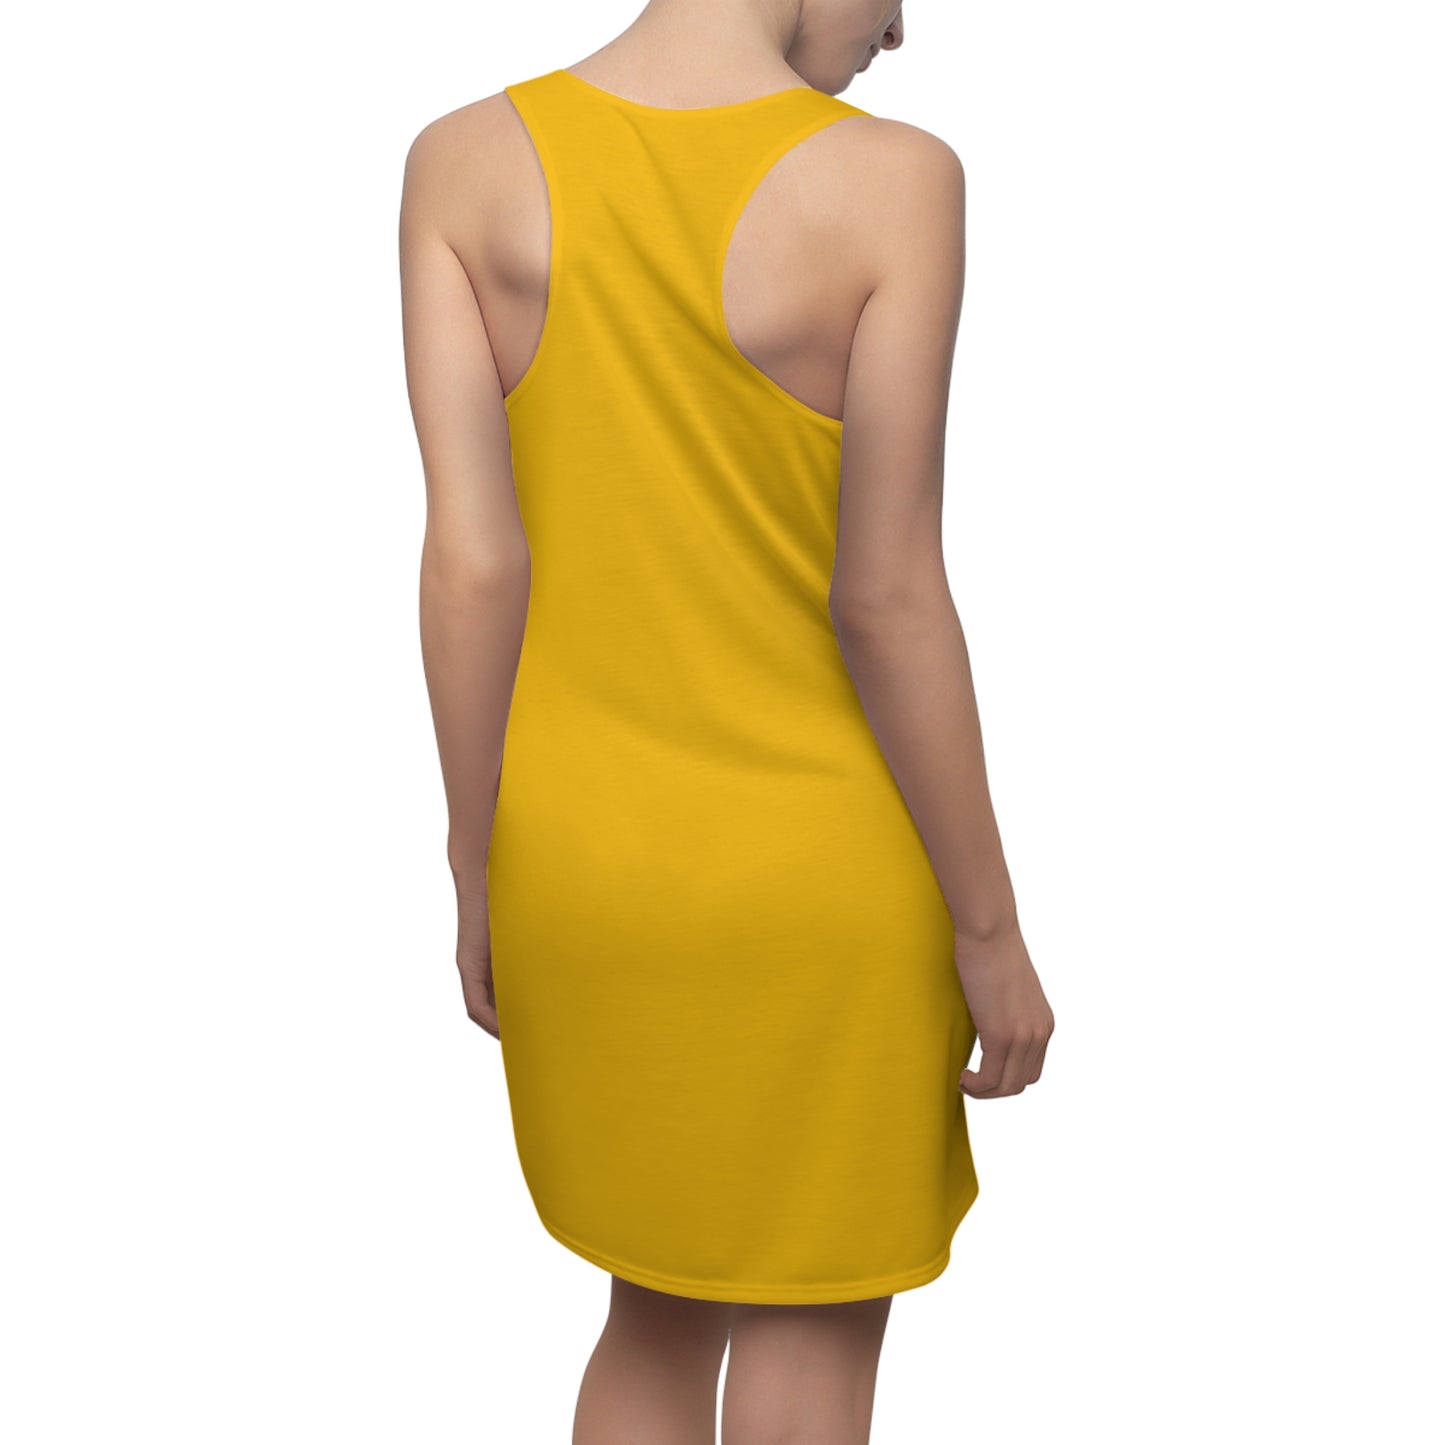 "Yellow" Racerback Dress